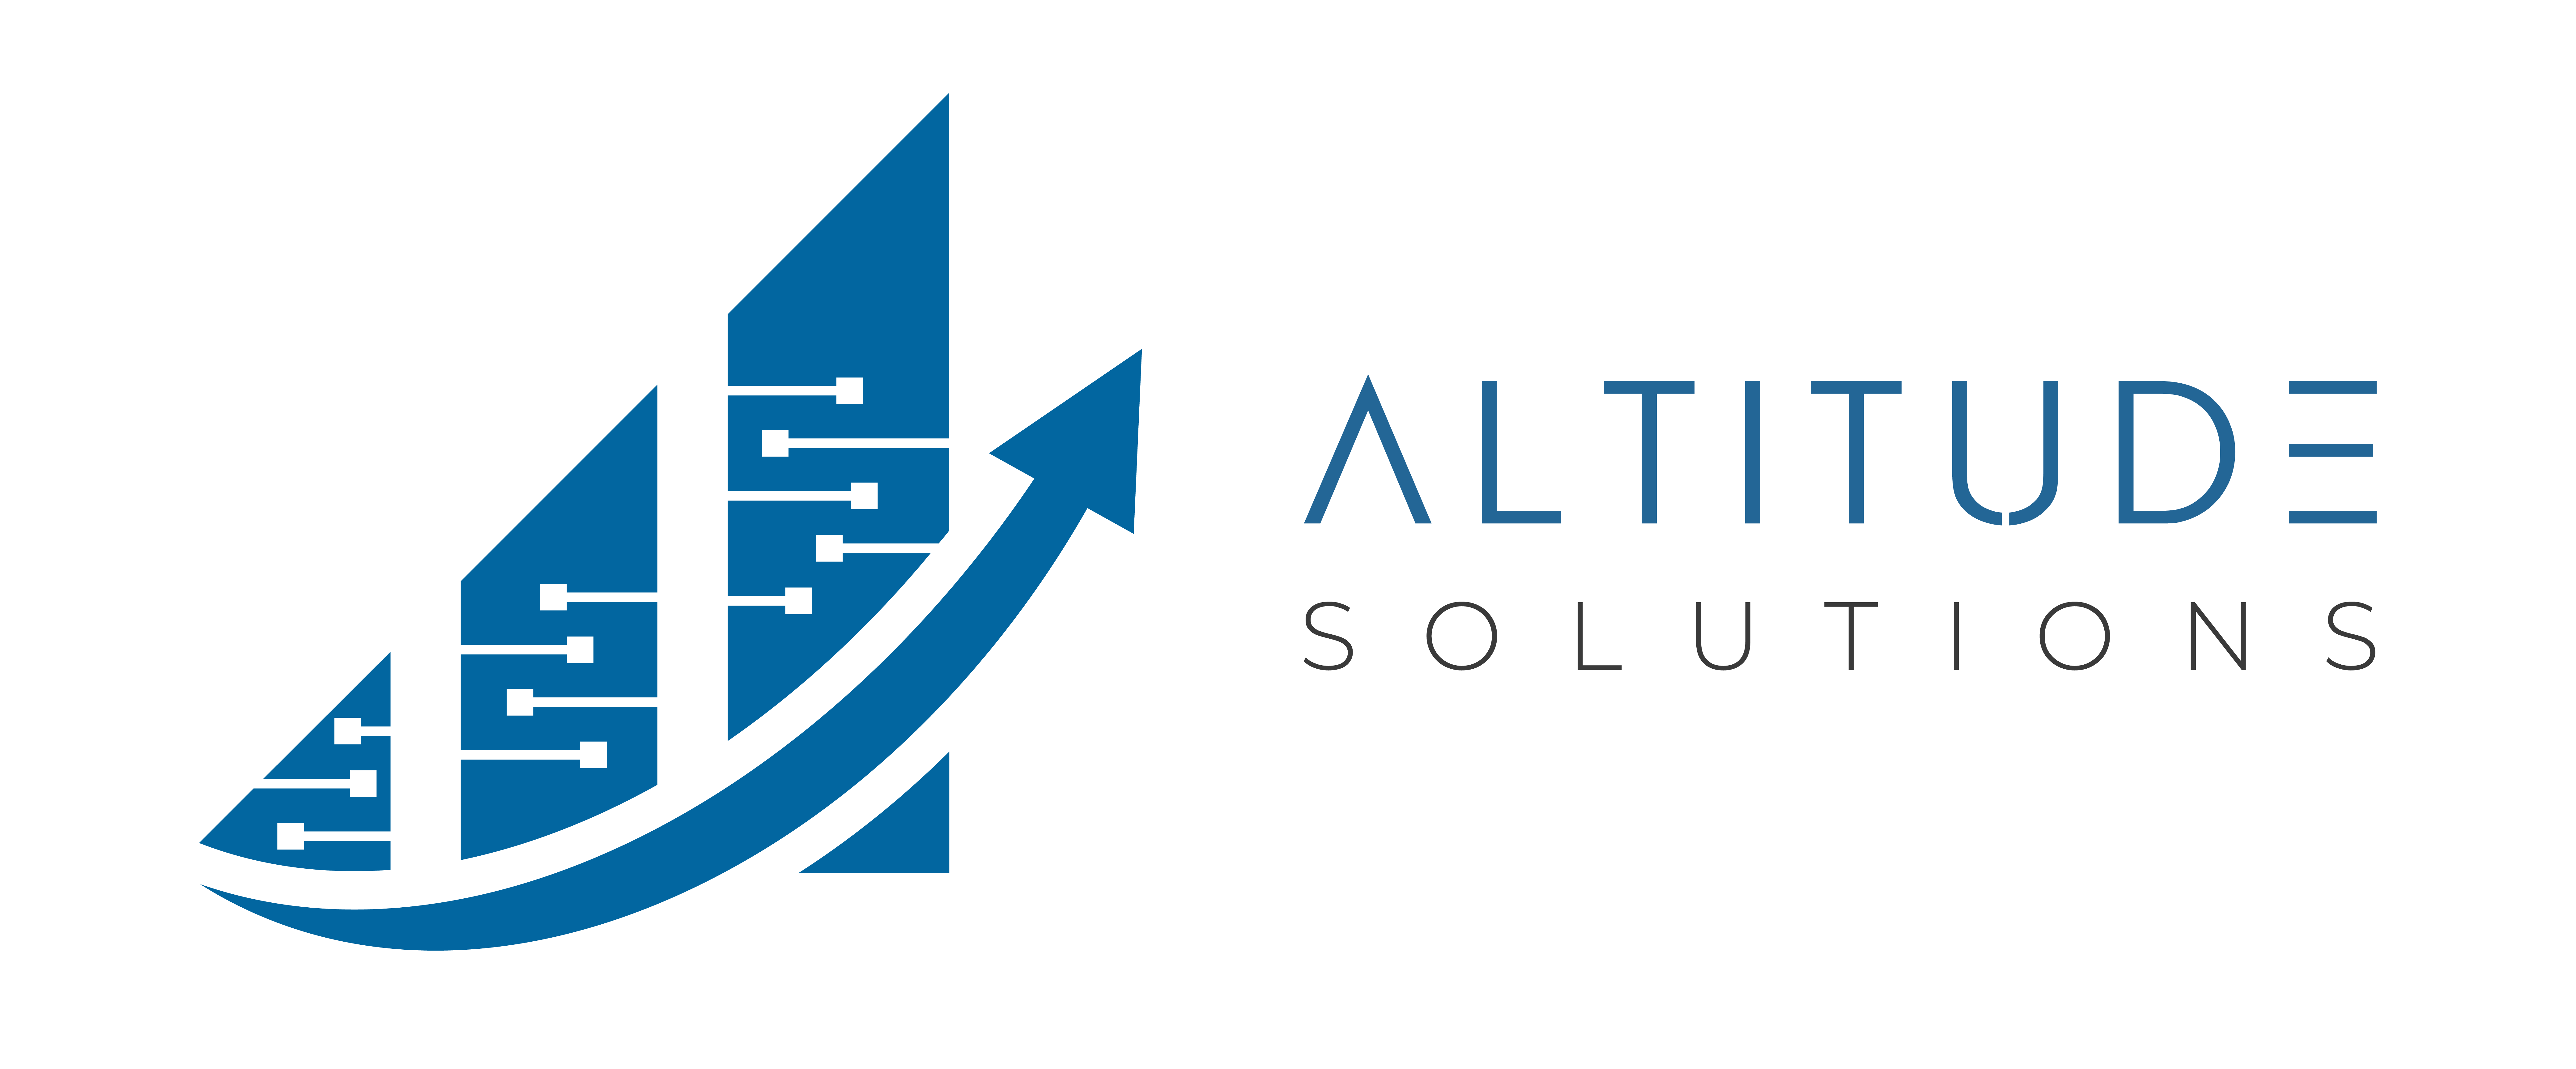 First solutions. City-solutions логотип. Apex solutions logo. Alt logo. Gesteknik provides Solitions logo.